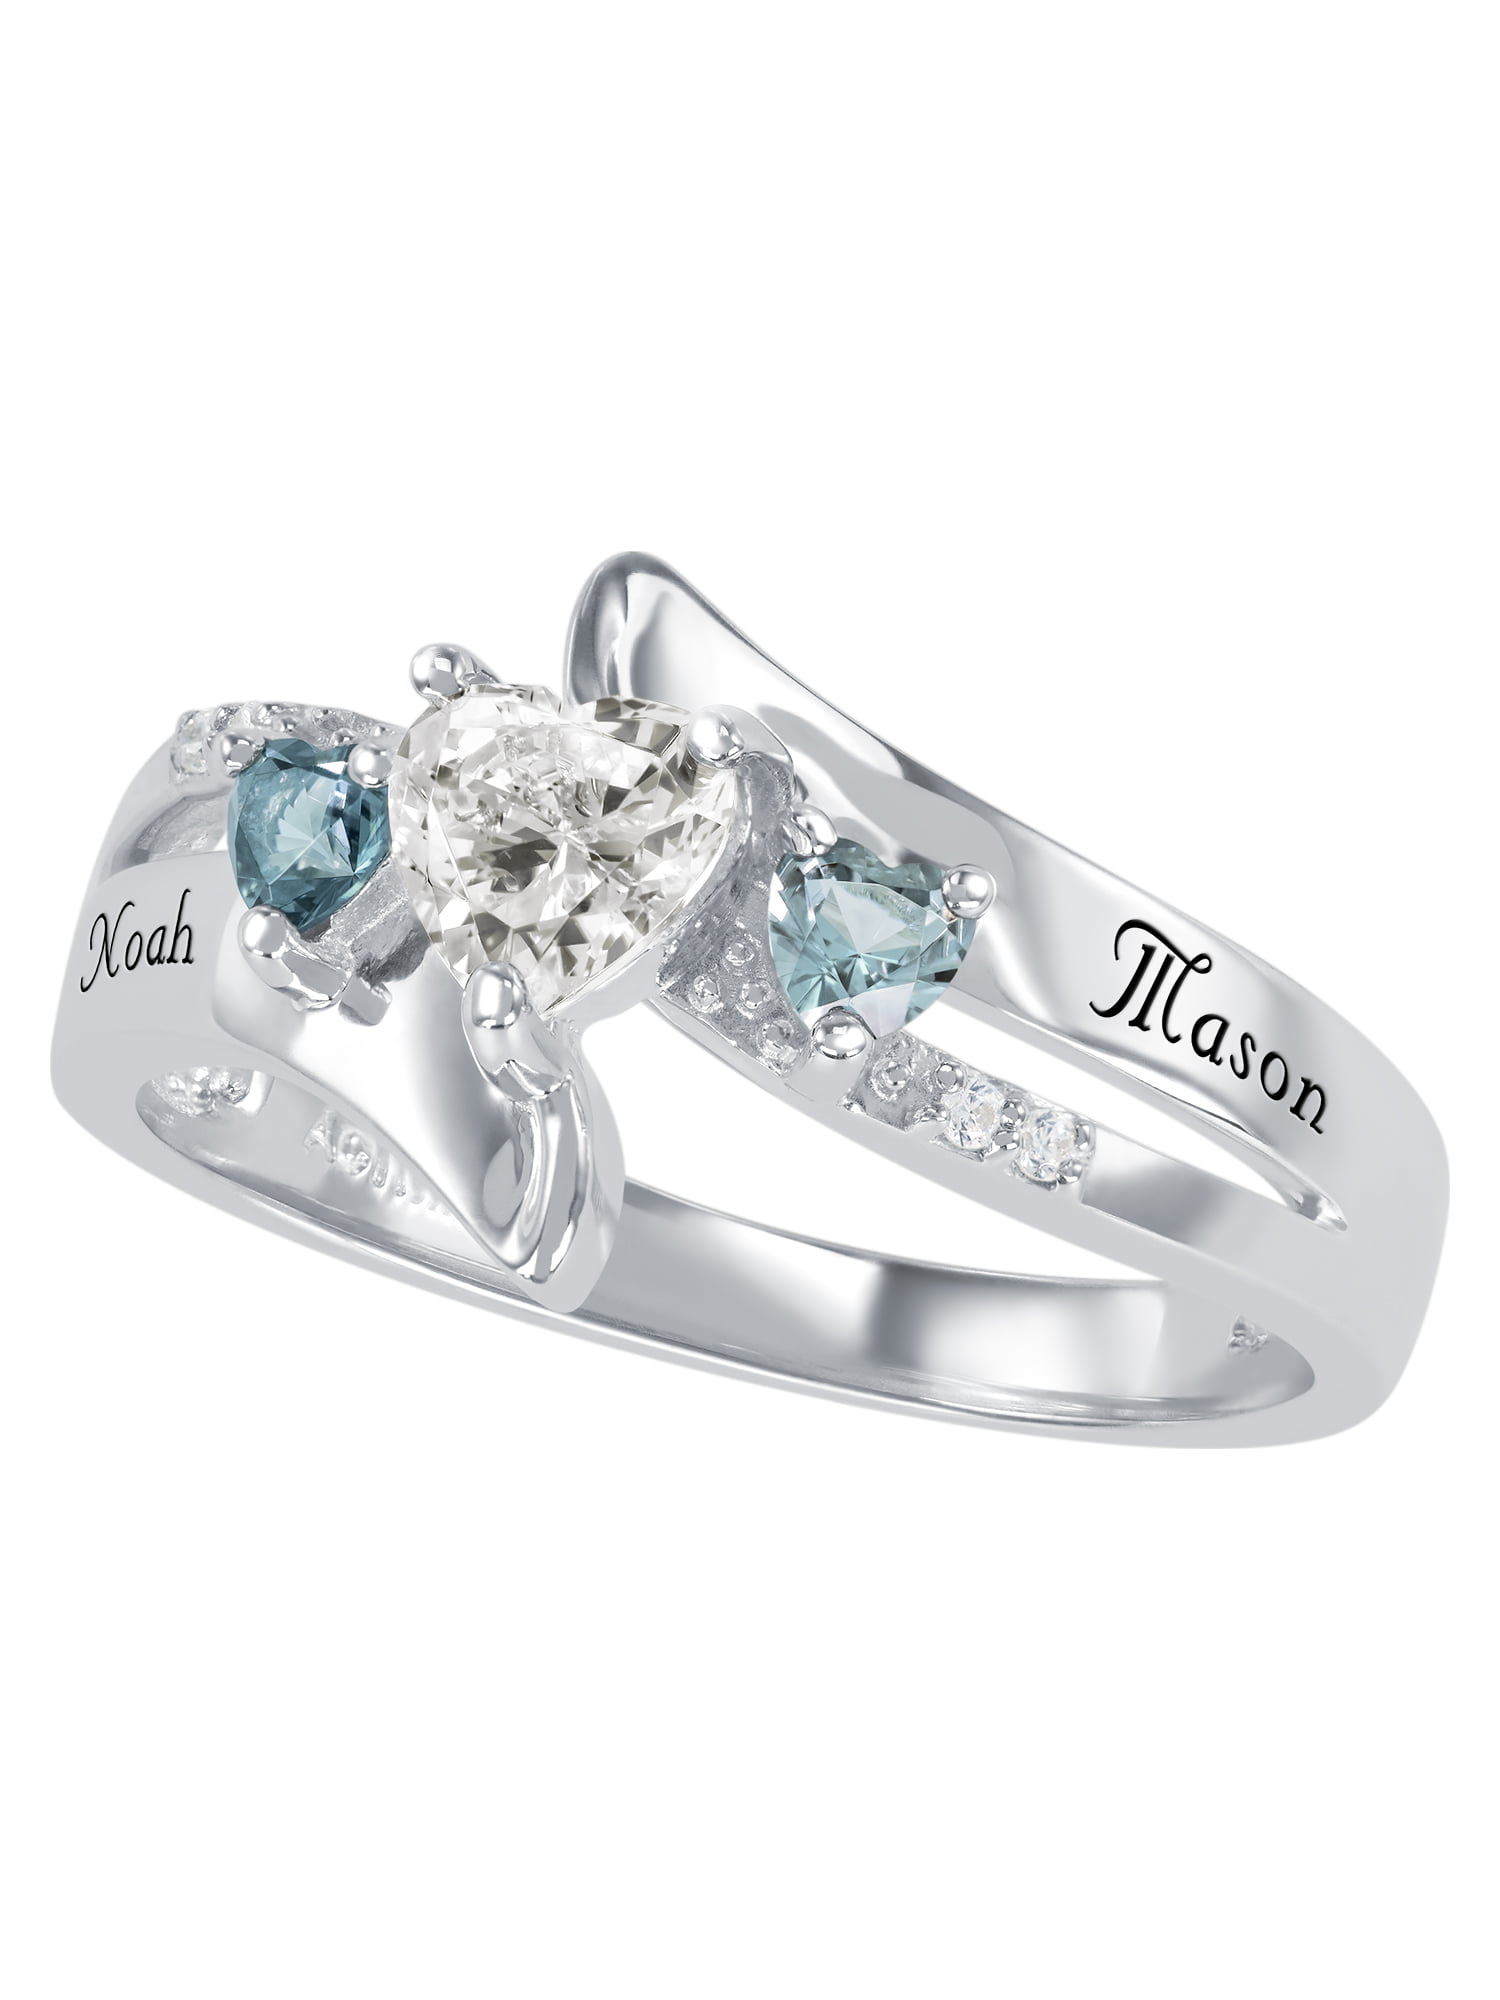 Engagement Rings - Personalized Diamond Jewelry